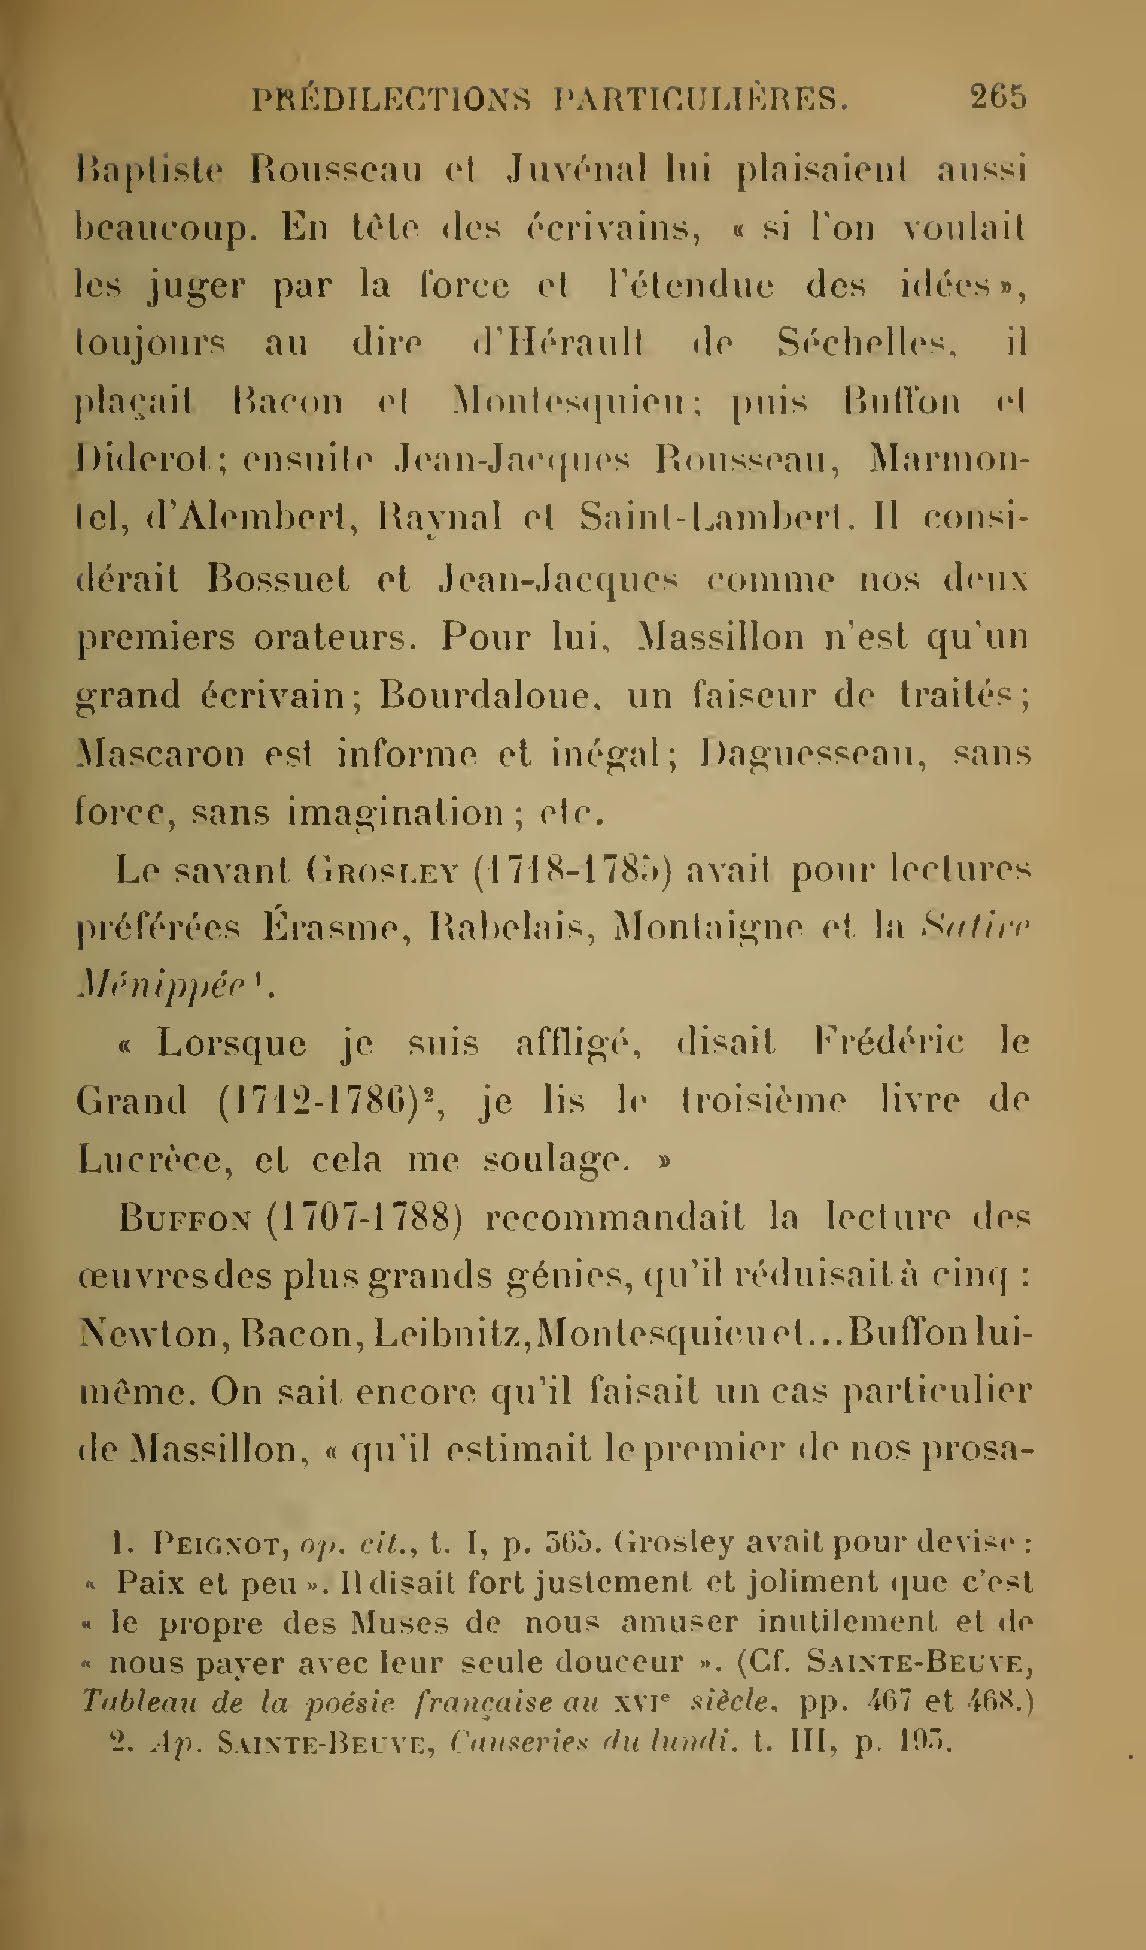 Albert Cim, Le Livre, t. I, p. 265.